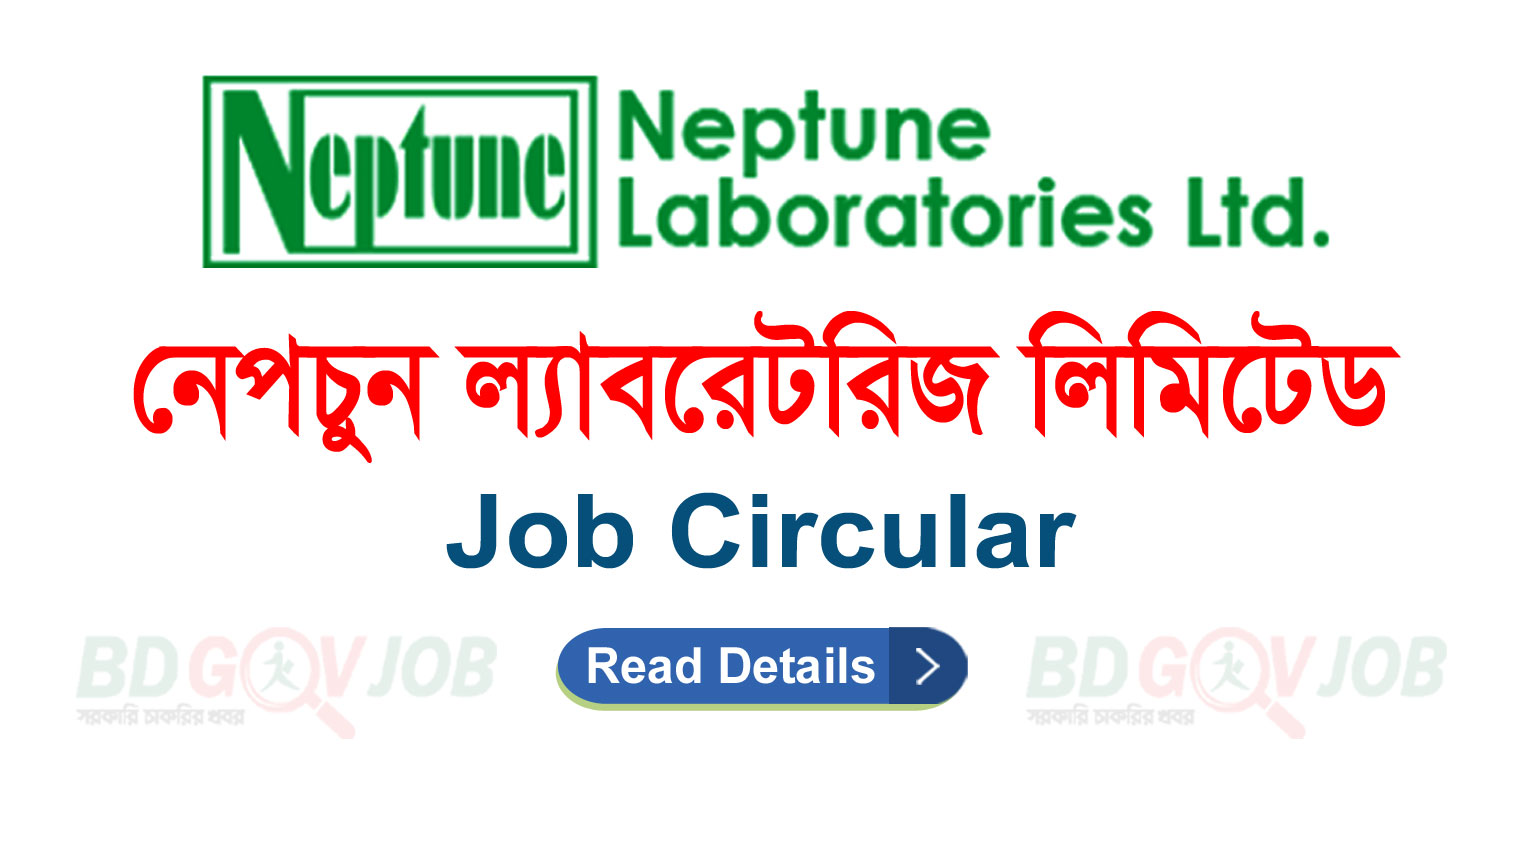 Neptune Laboratories Job Circular 2023